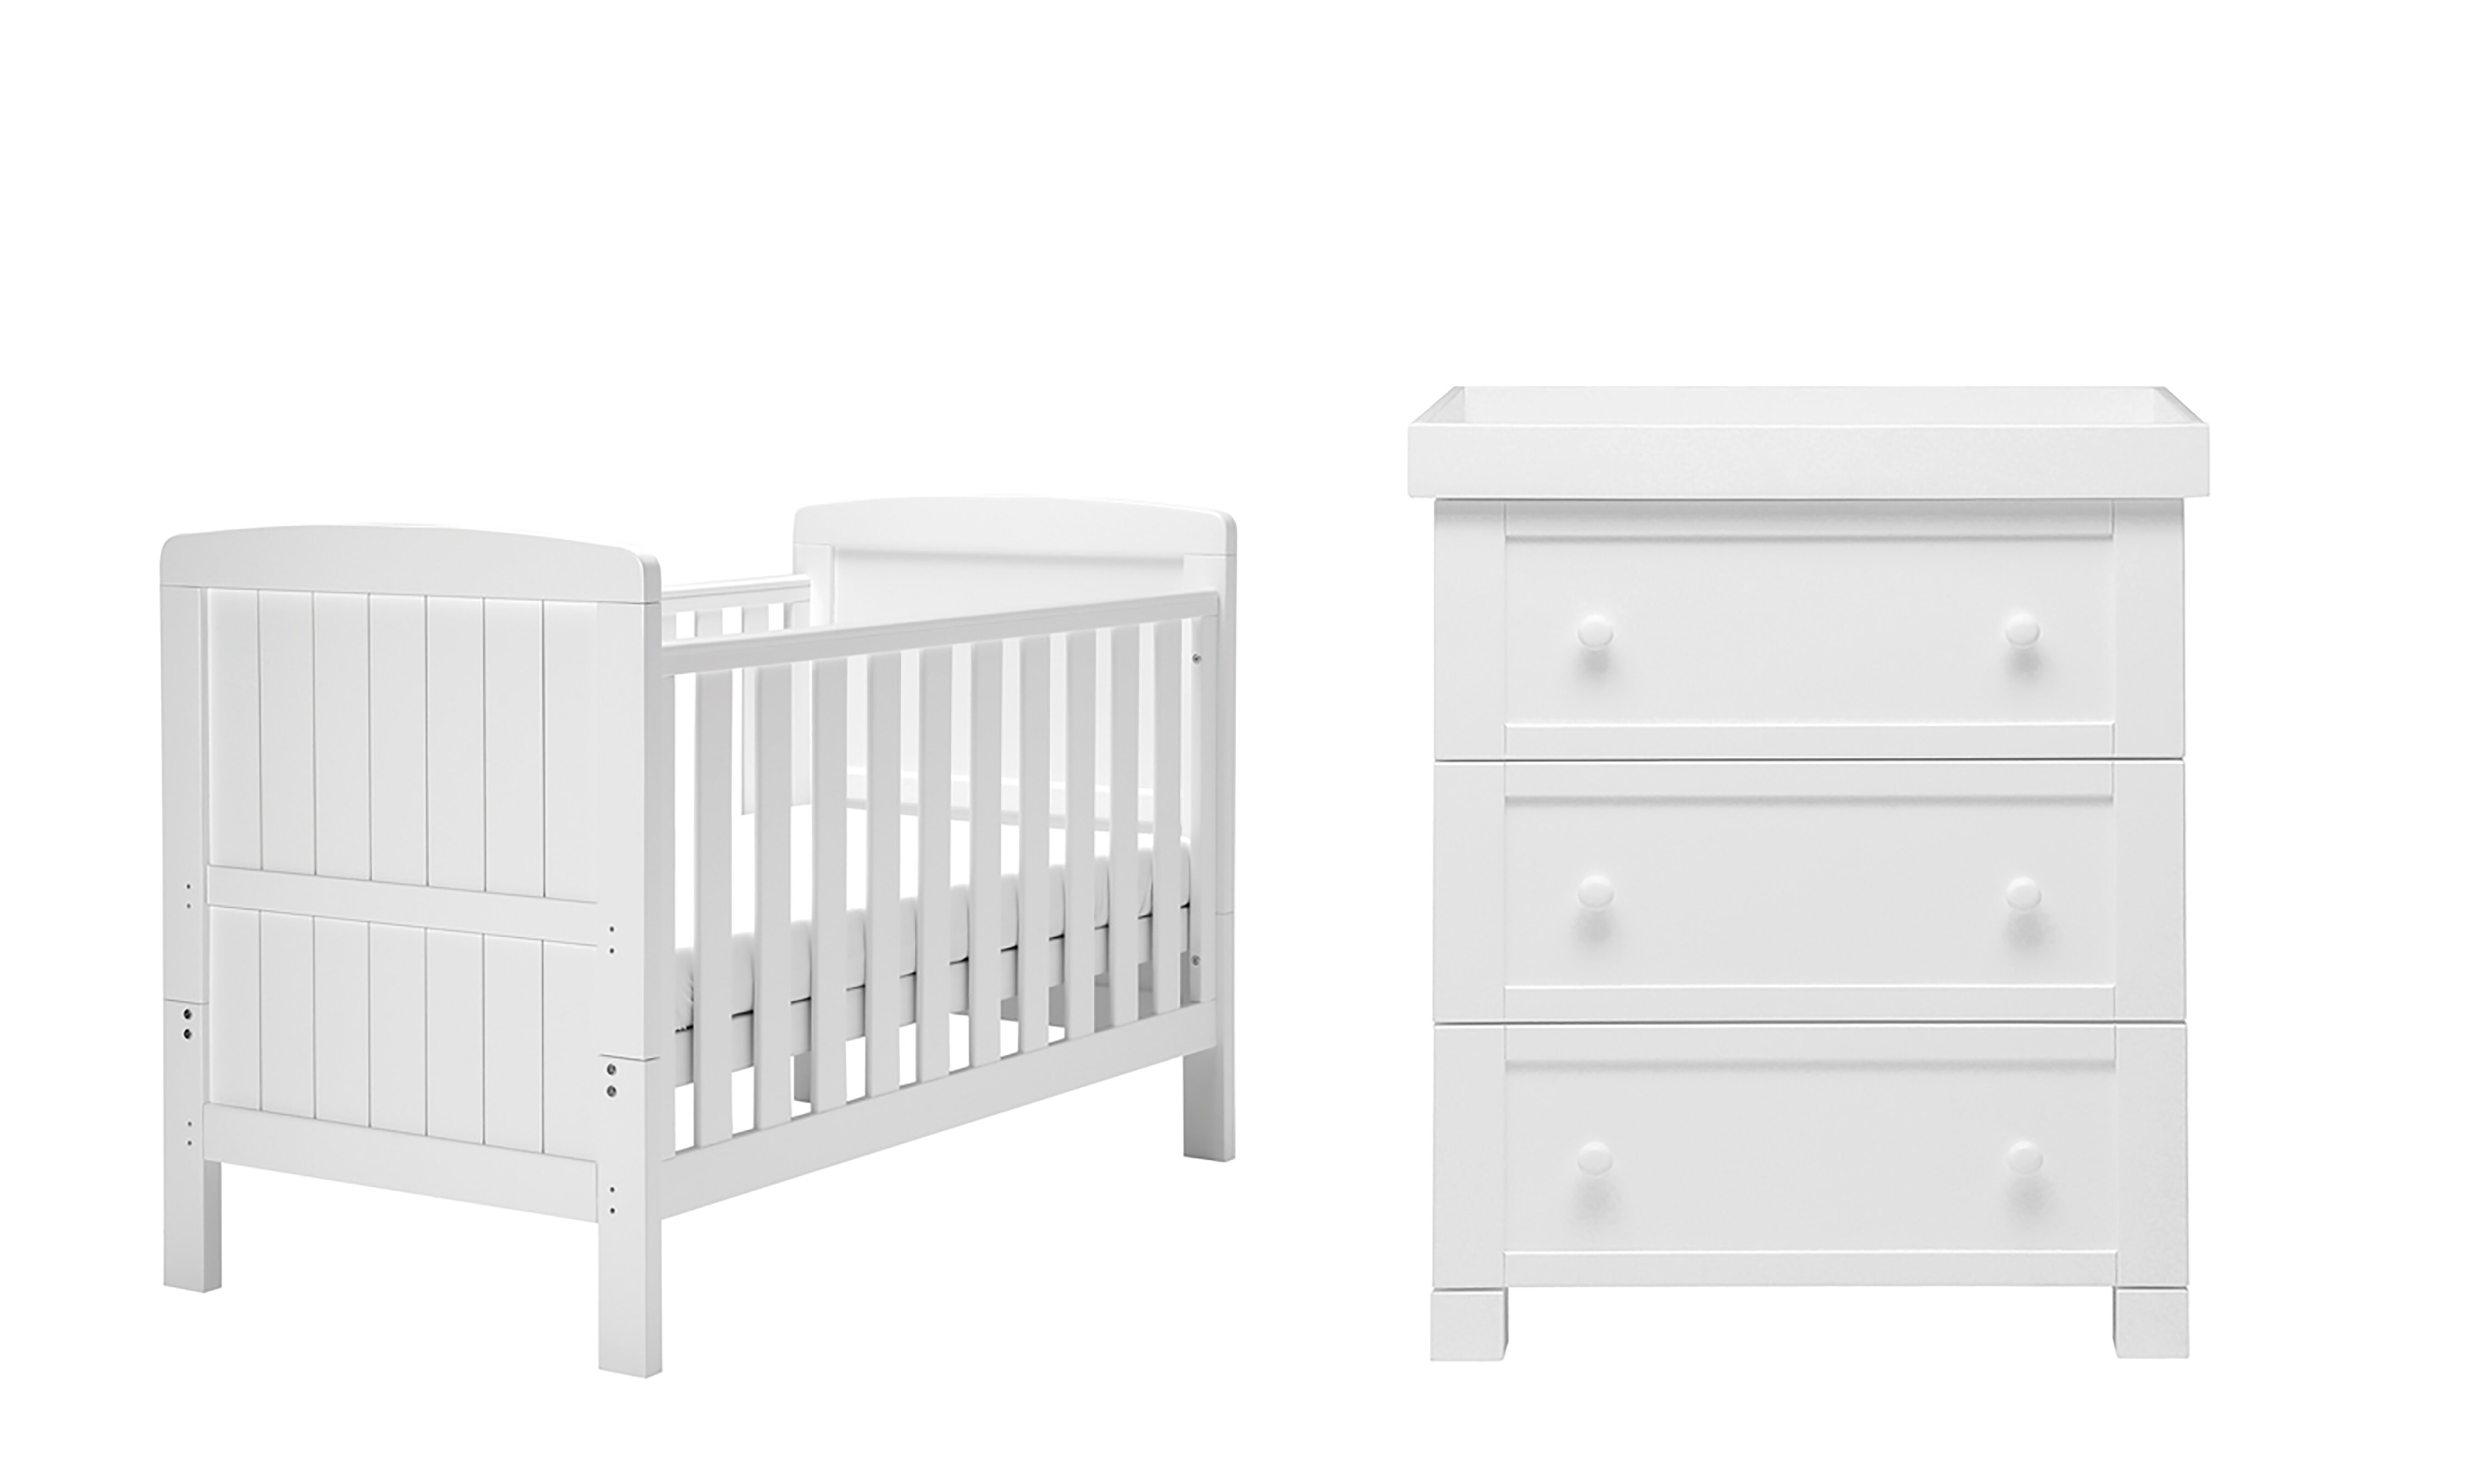 Harriet Bee Paxton Cot Bed 2 Piece Nursery Furniture Set Reviews